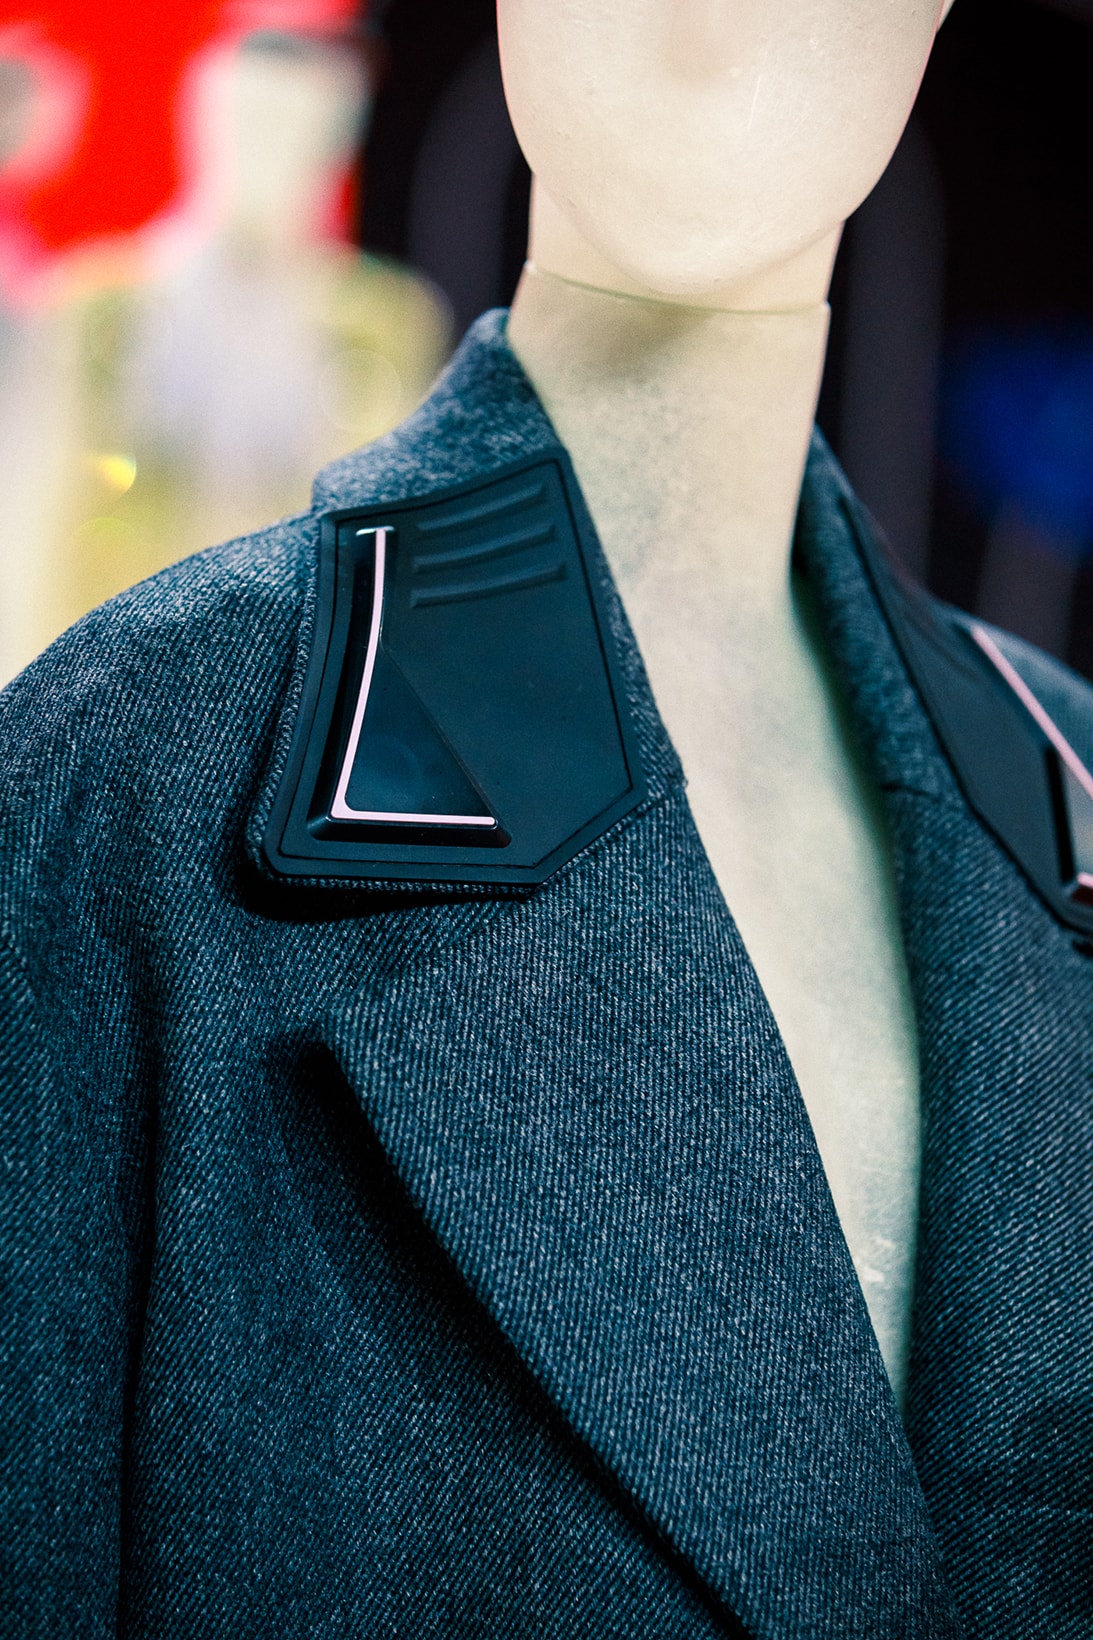 prada fall winter collection milan fashion week miuccia closer look jackets belts bags scarves headbands accessories